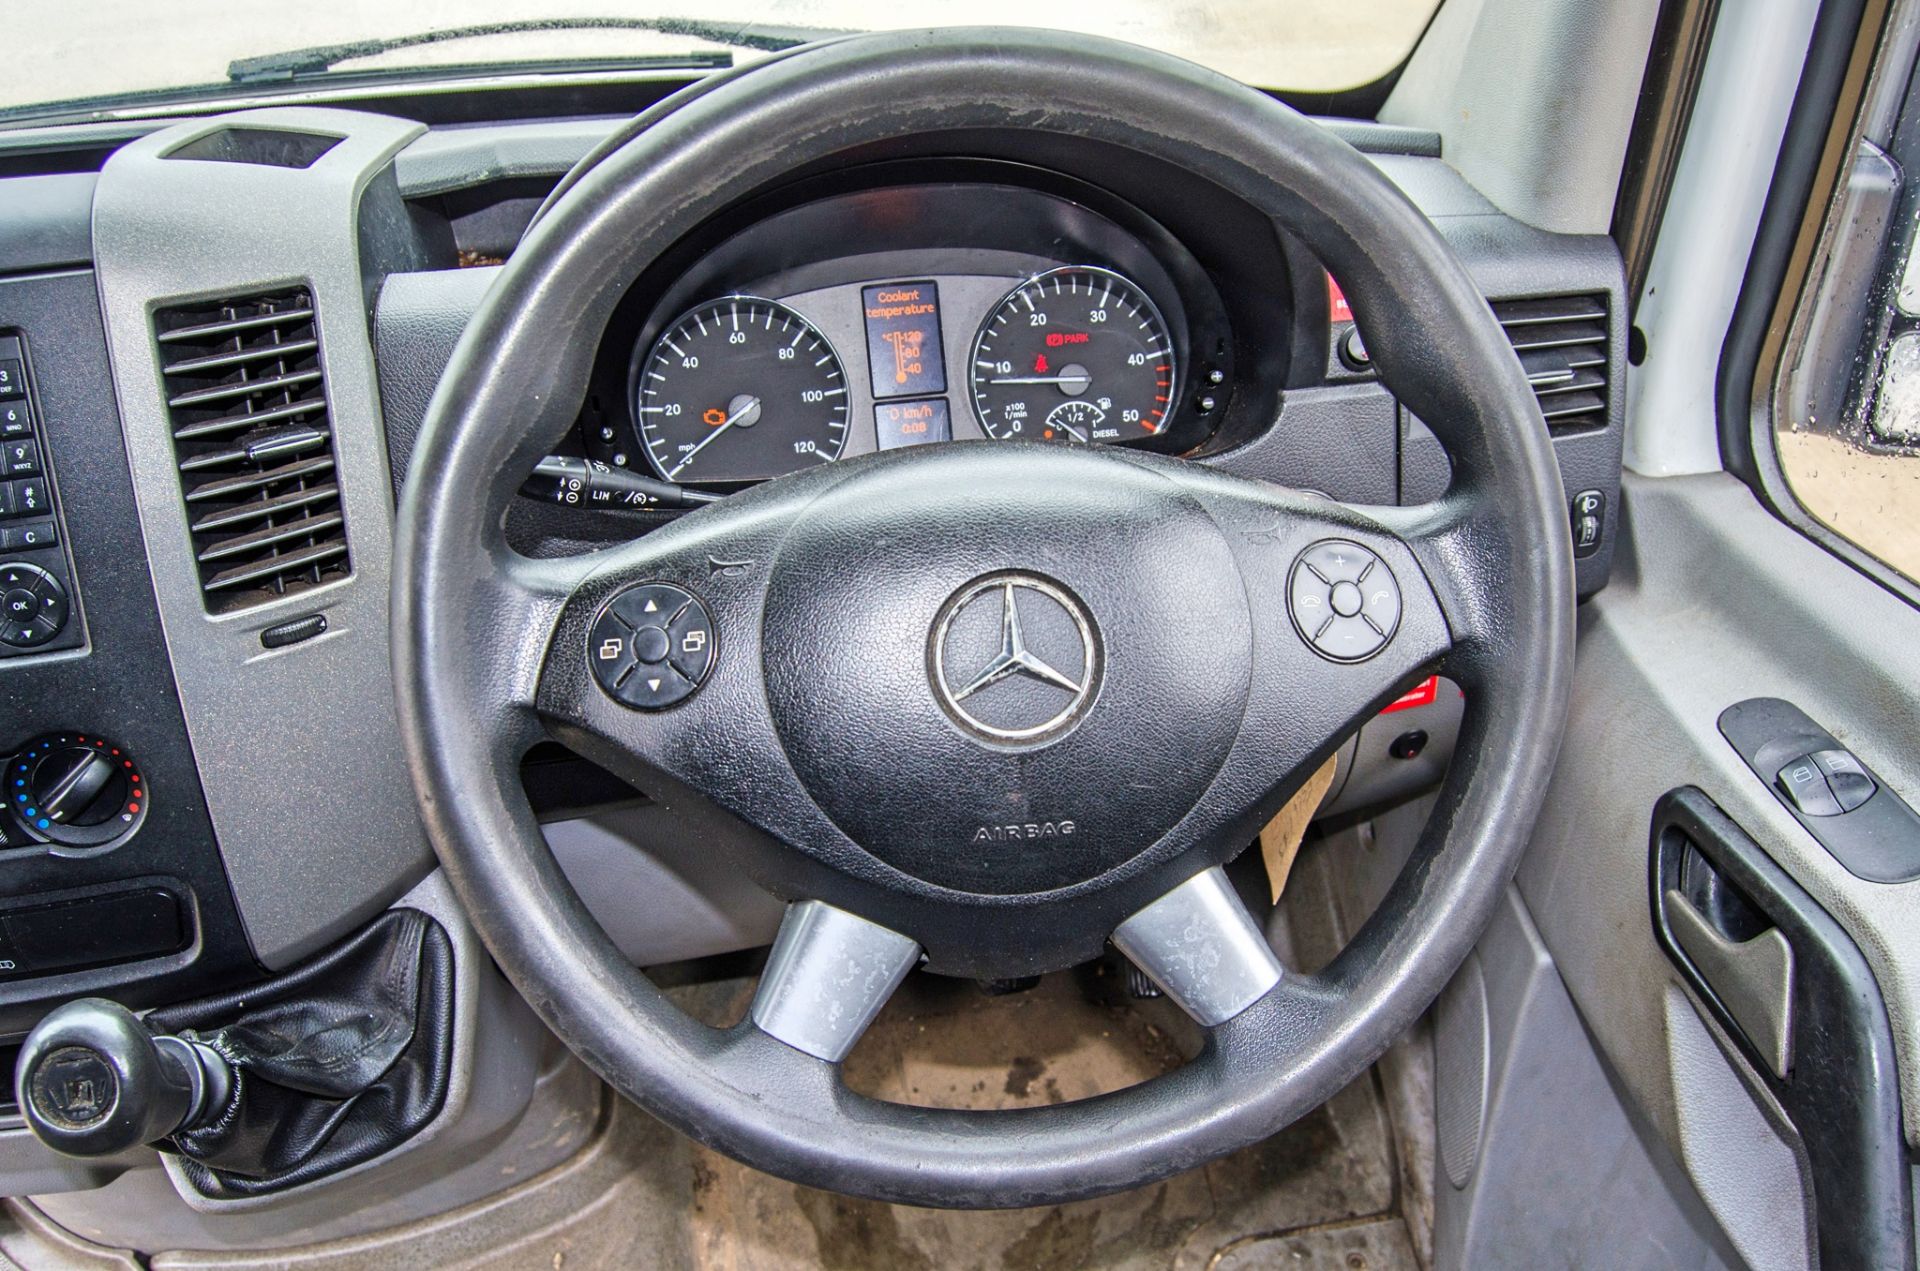 Mercedes Benz Sprinter 313CDi 2.1 diesel 6 speed manual MWB panel van Registration Number: FG64 - Image 23 of 32